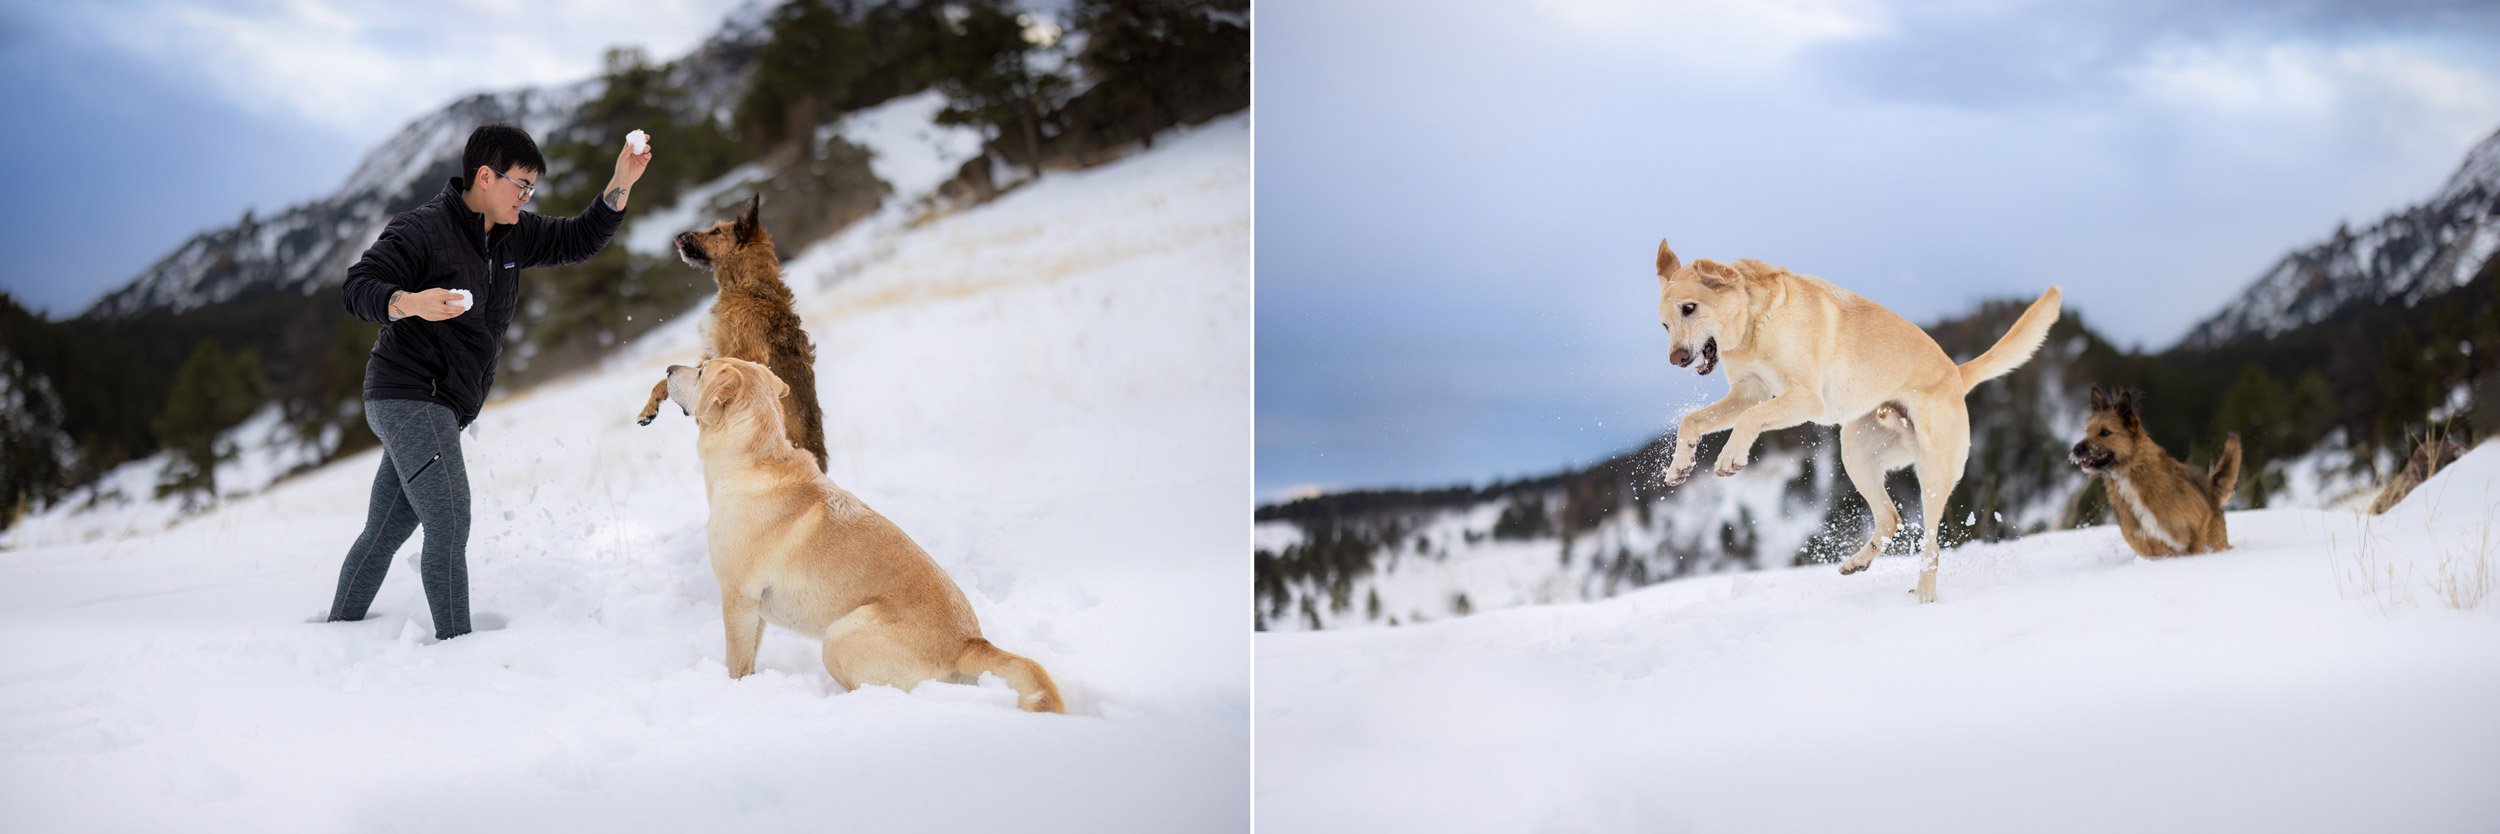 dogs-playing-in-snow-colorado.jpg